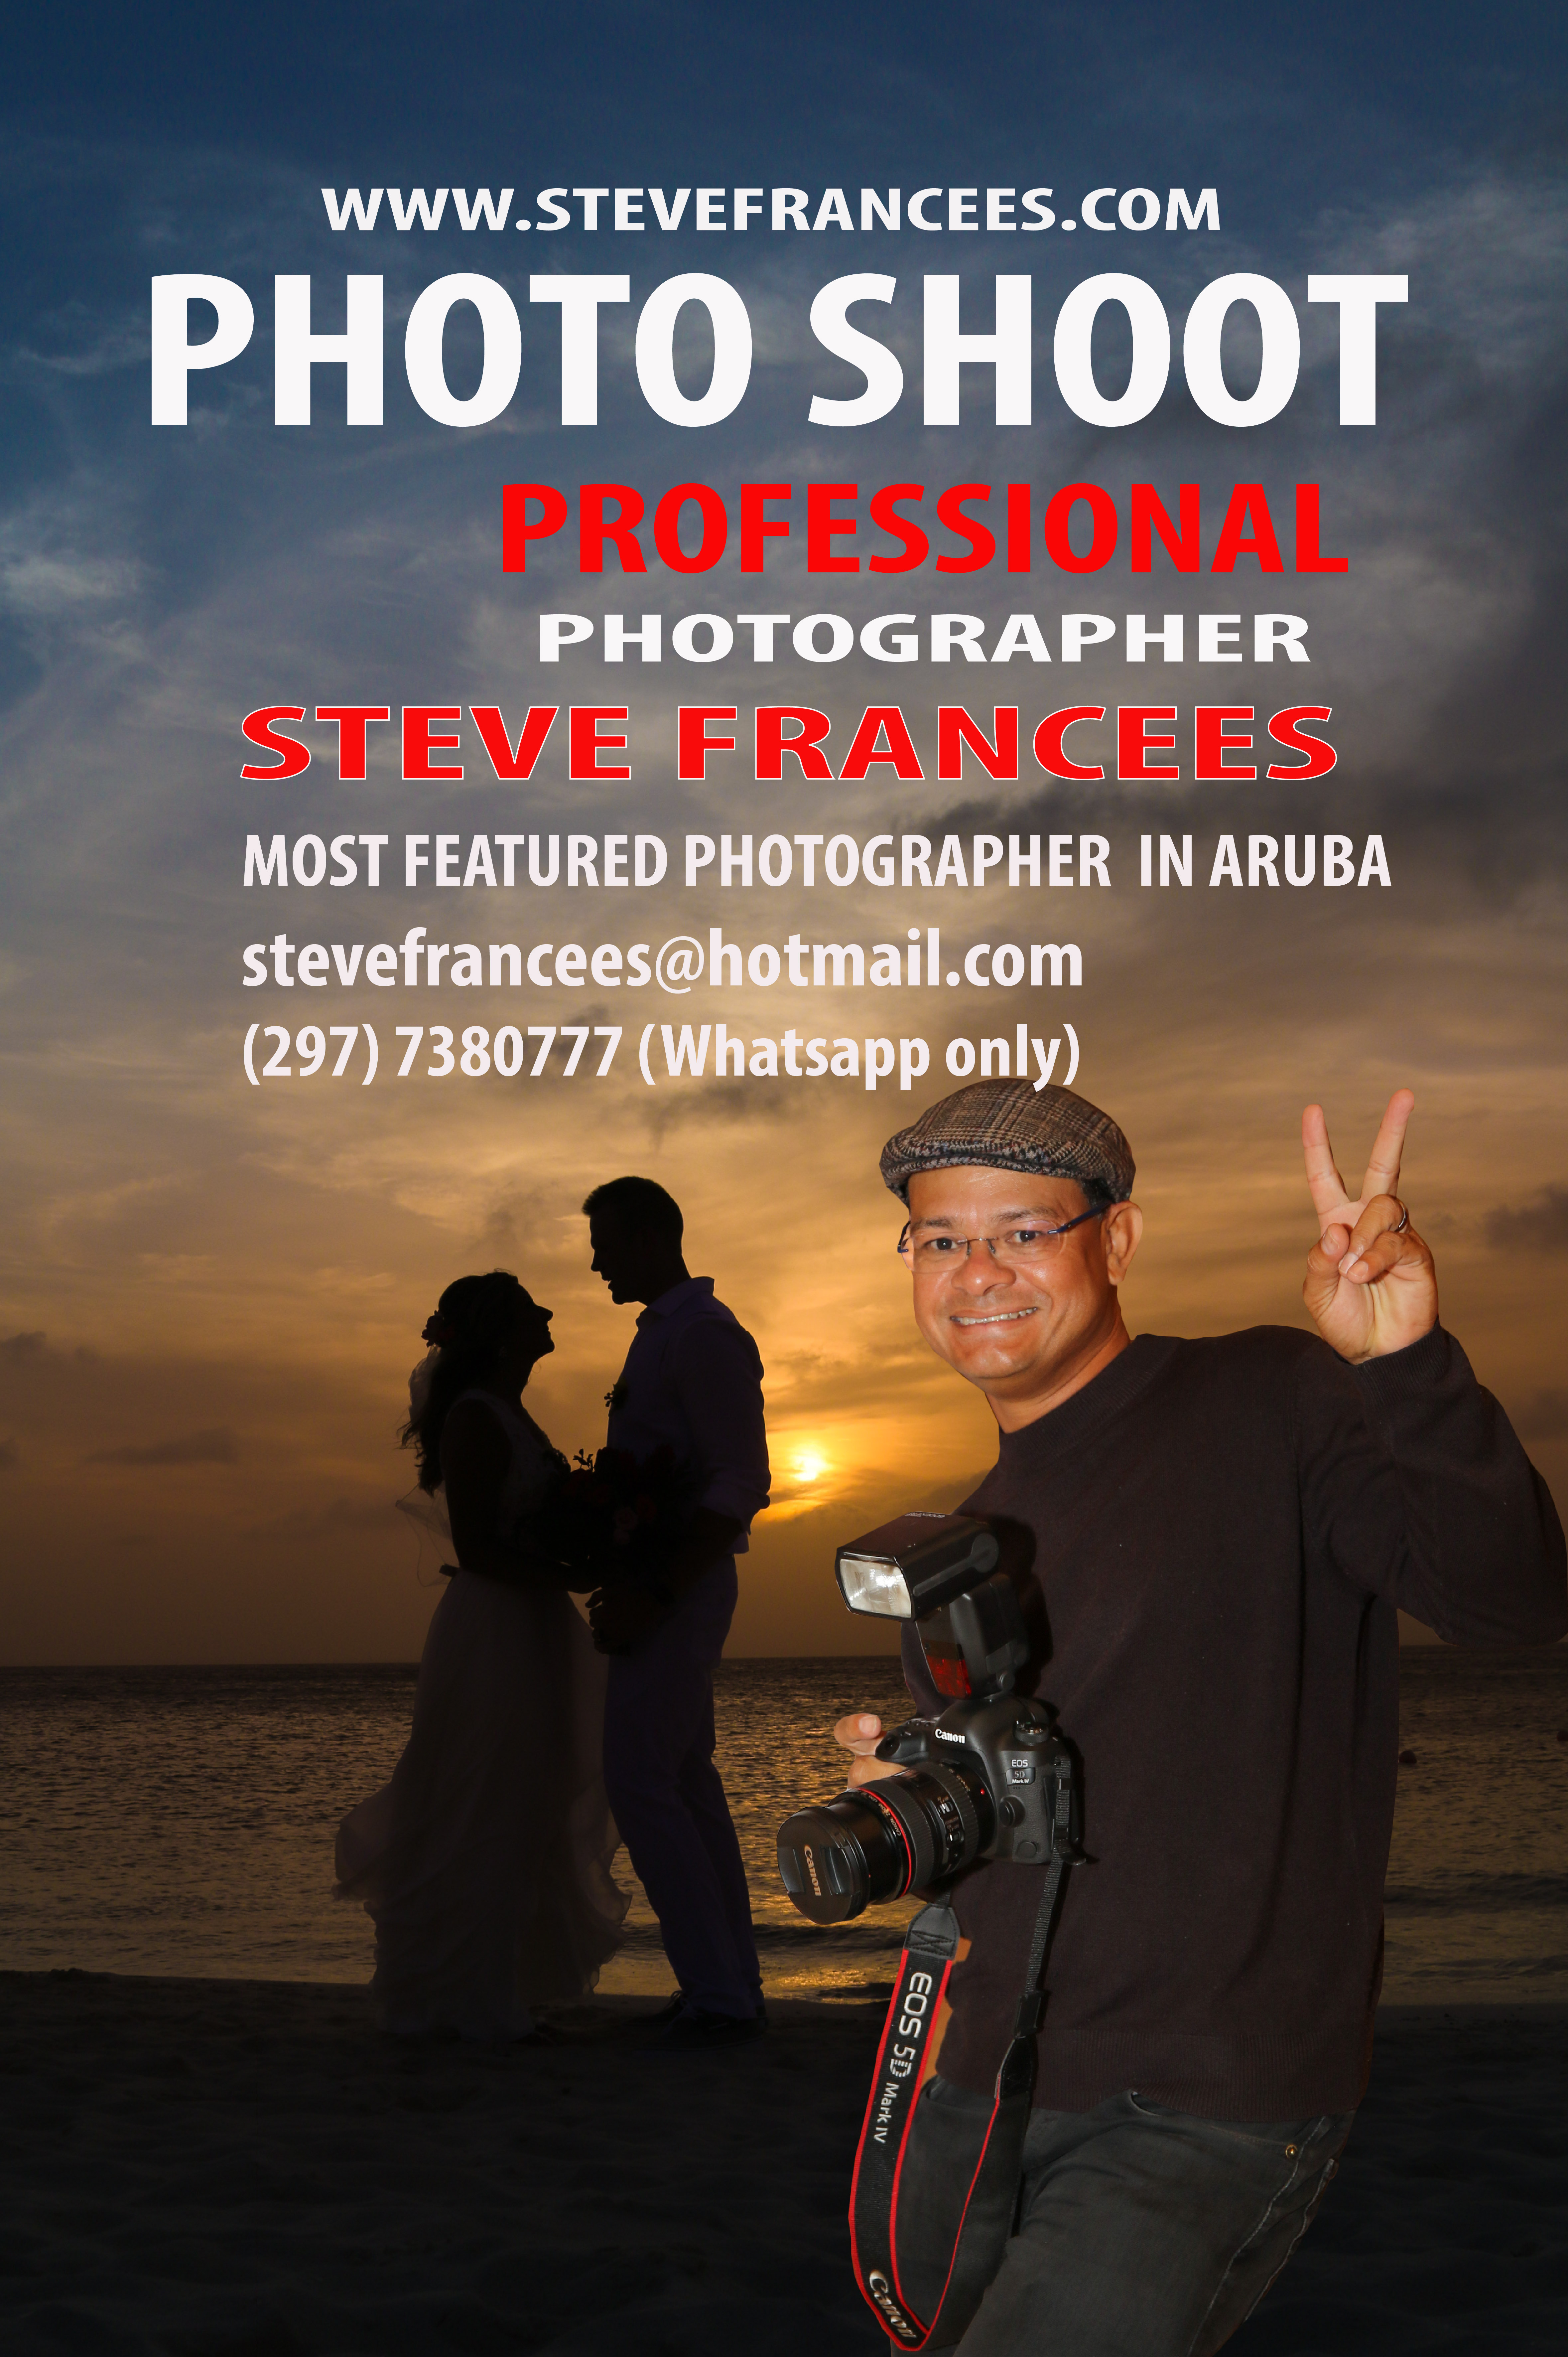 ARUBA PHOTOGRAPHER STEVE FRANCEES